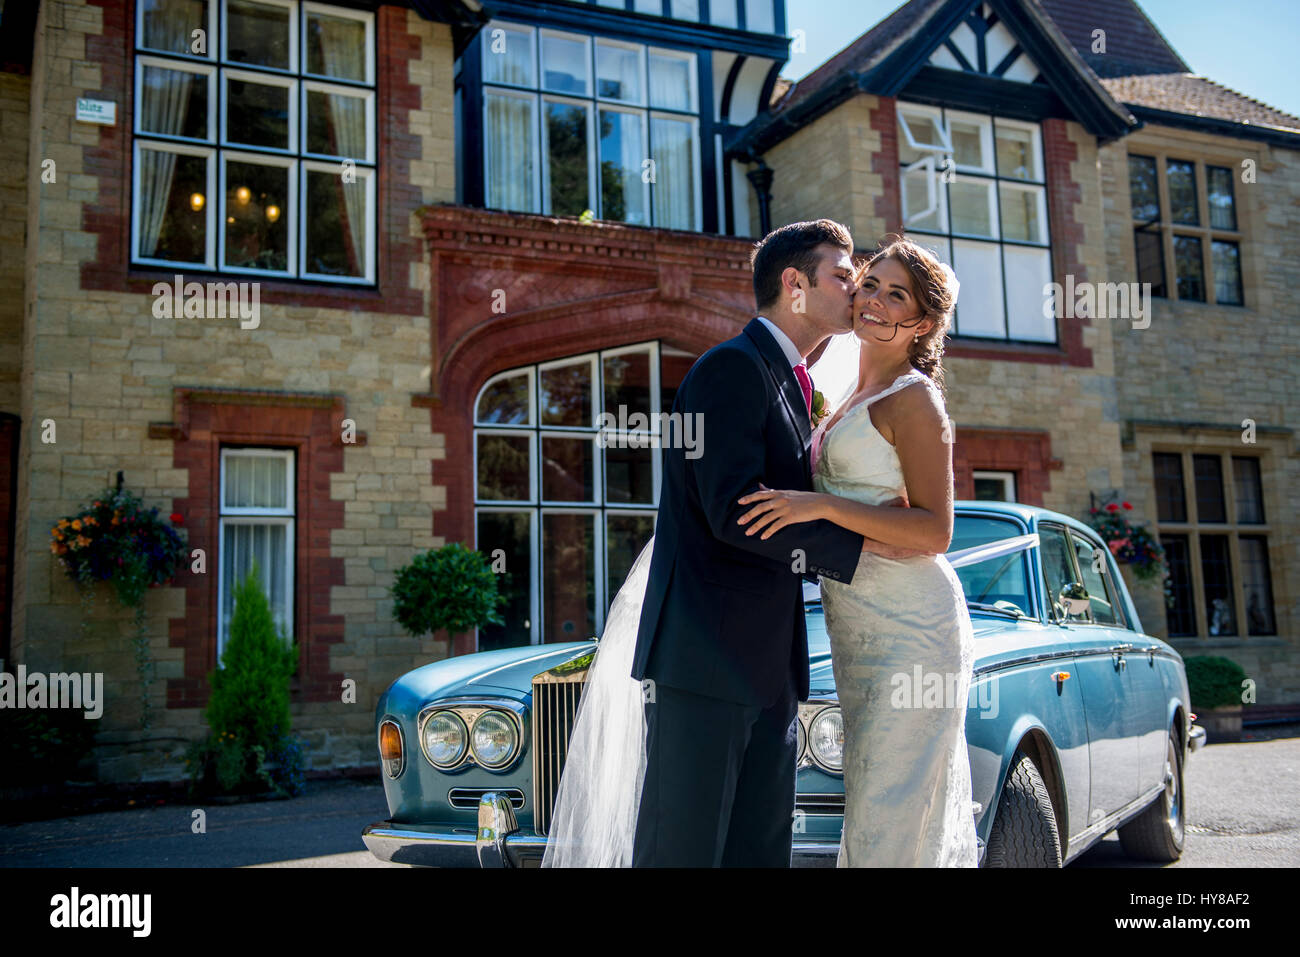 A bride and groom share a kiss on their wedding day as the wedding car awaits them Stock Photo